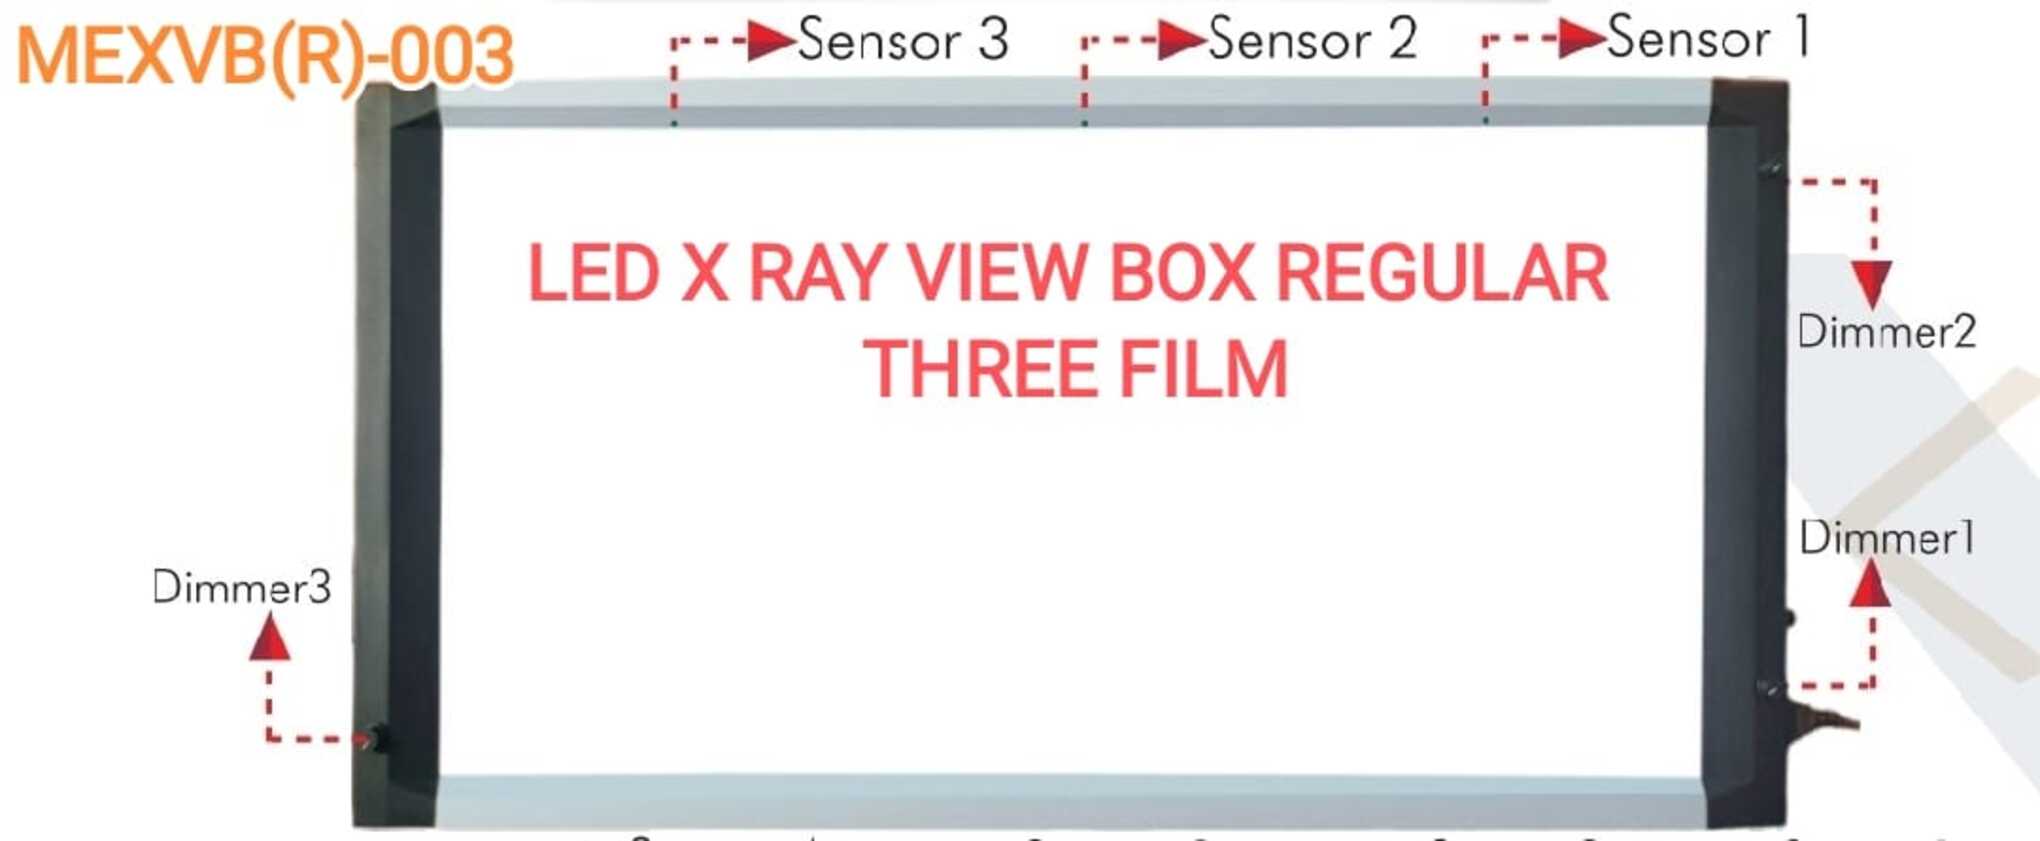 LED X RAY VIEW BOX REGULAR THREE FILM